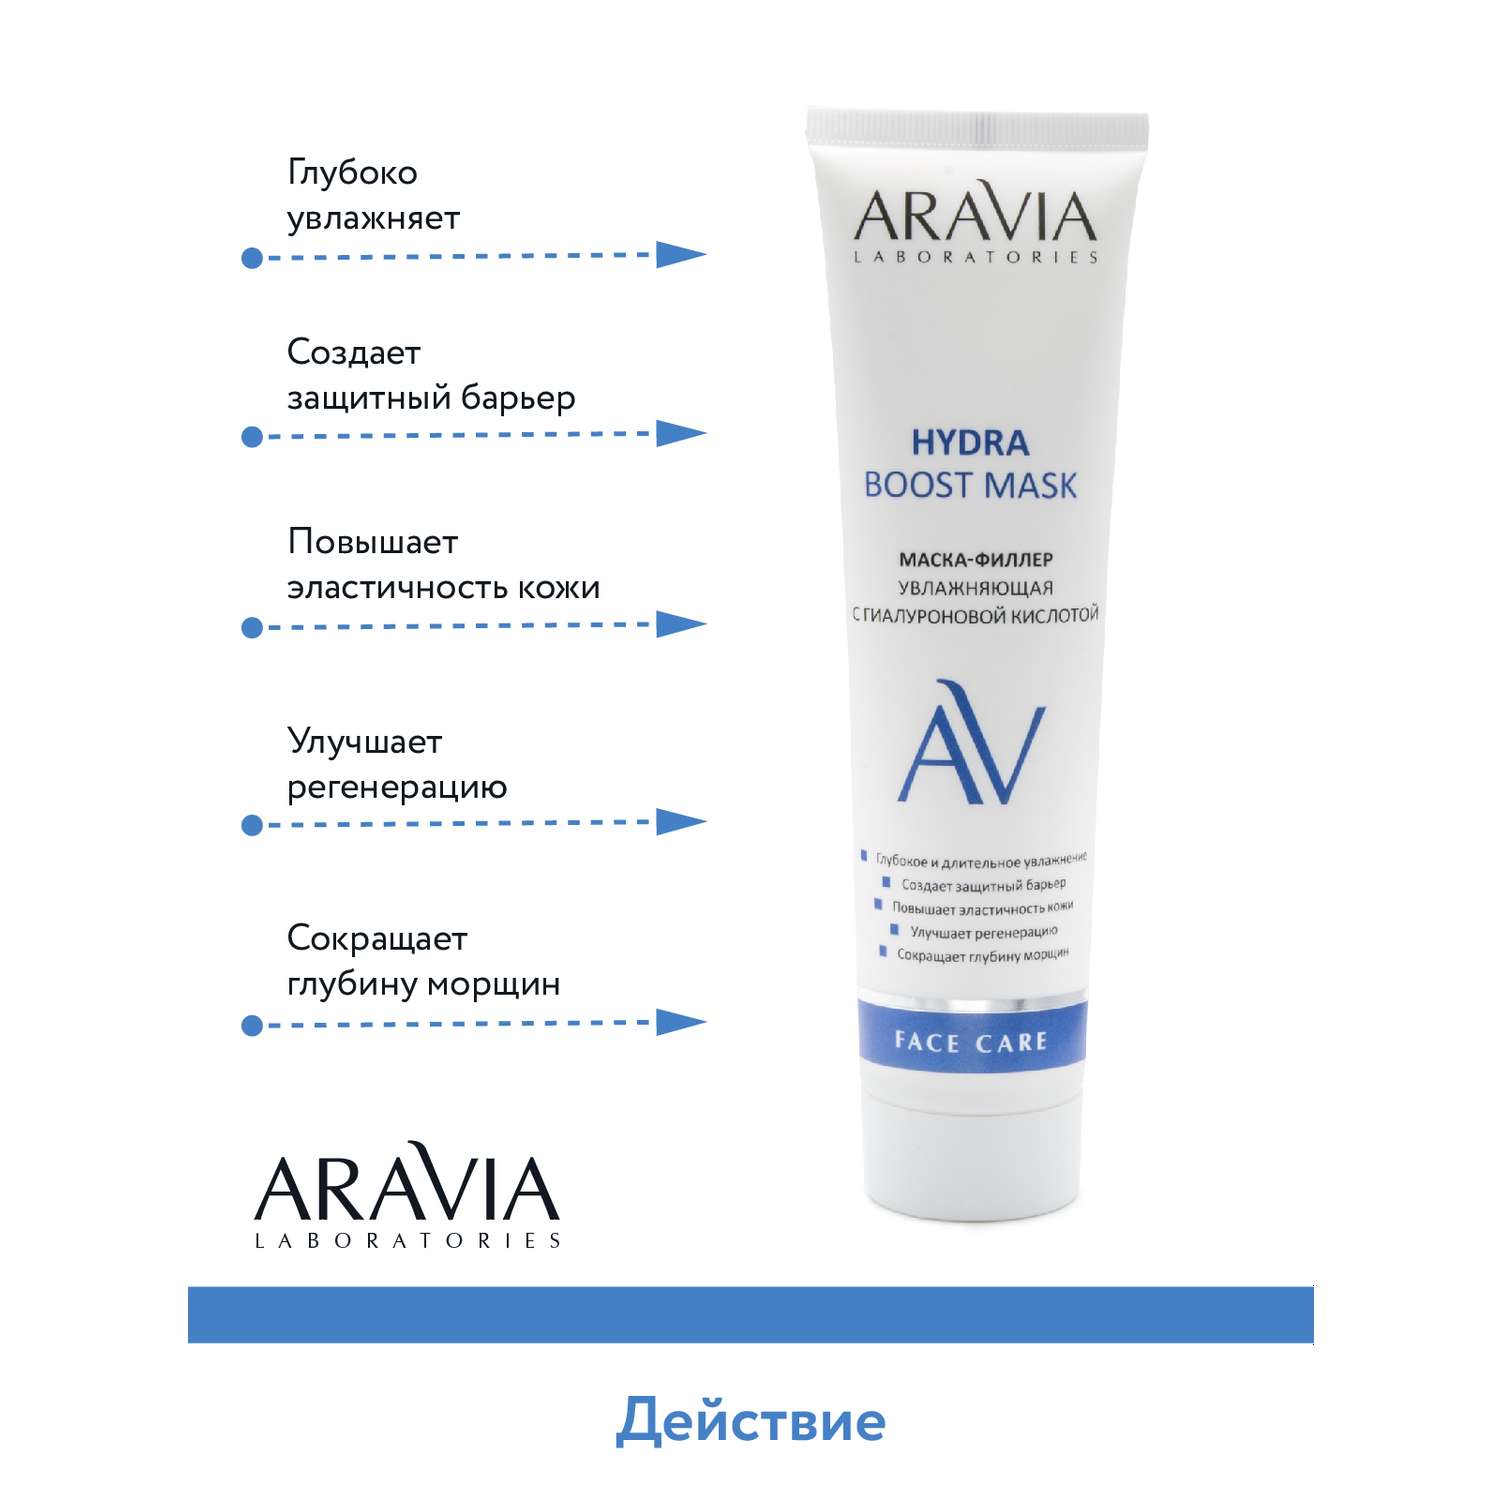 Маска-филлер для лица ARAVIA Laboratories с гиалуроновой кислотой Hydra Boost Mask 100 мл - фото 4